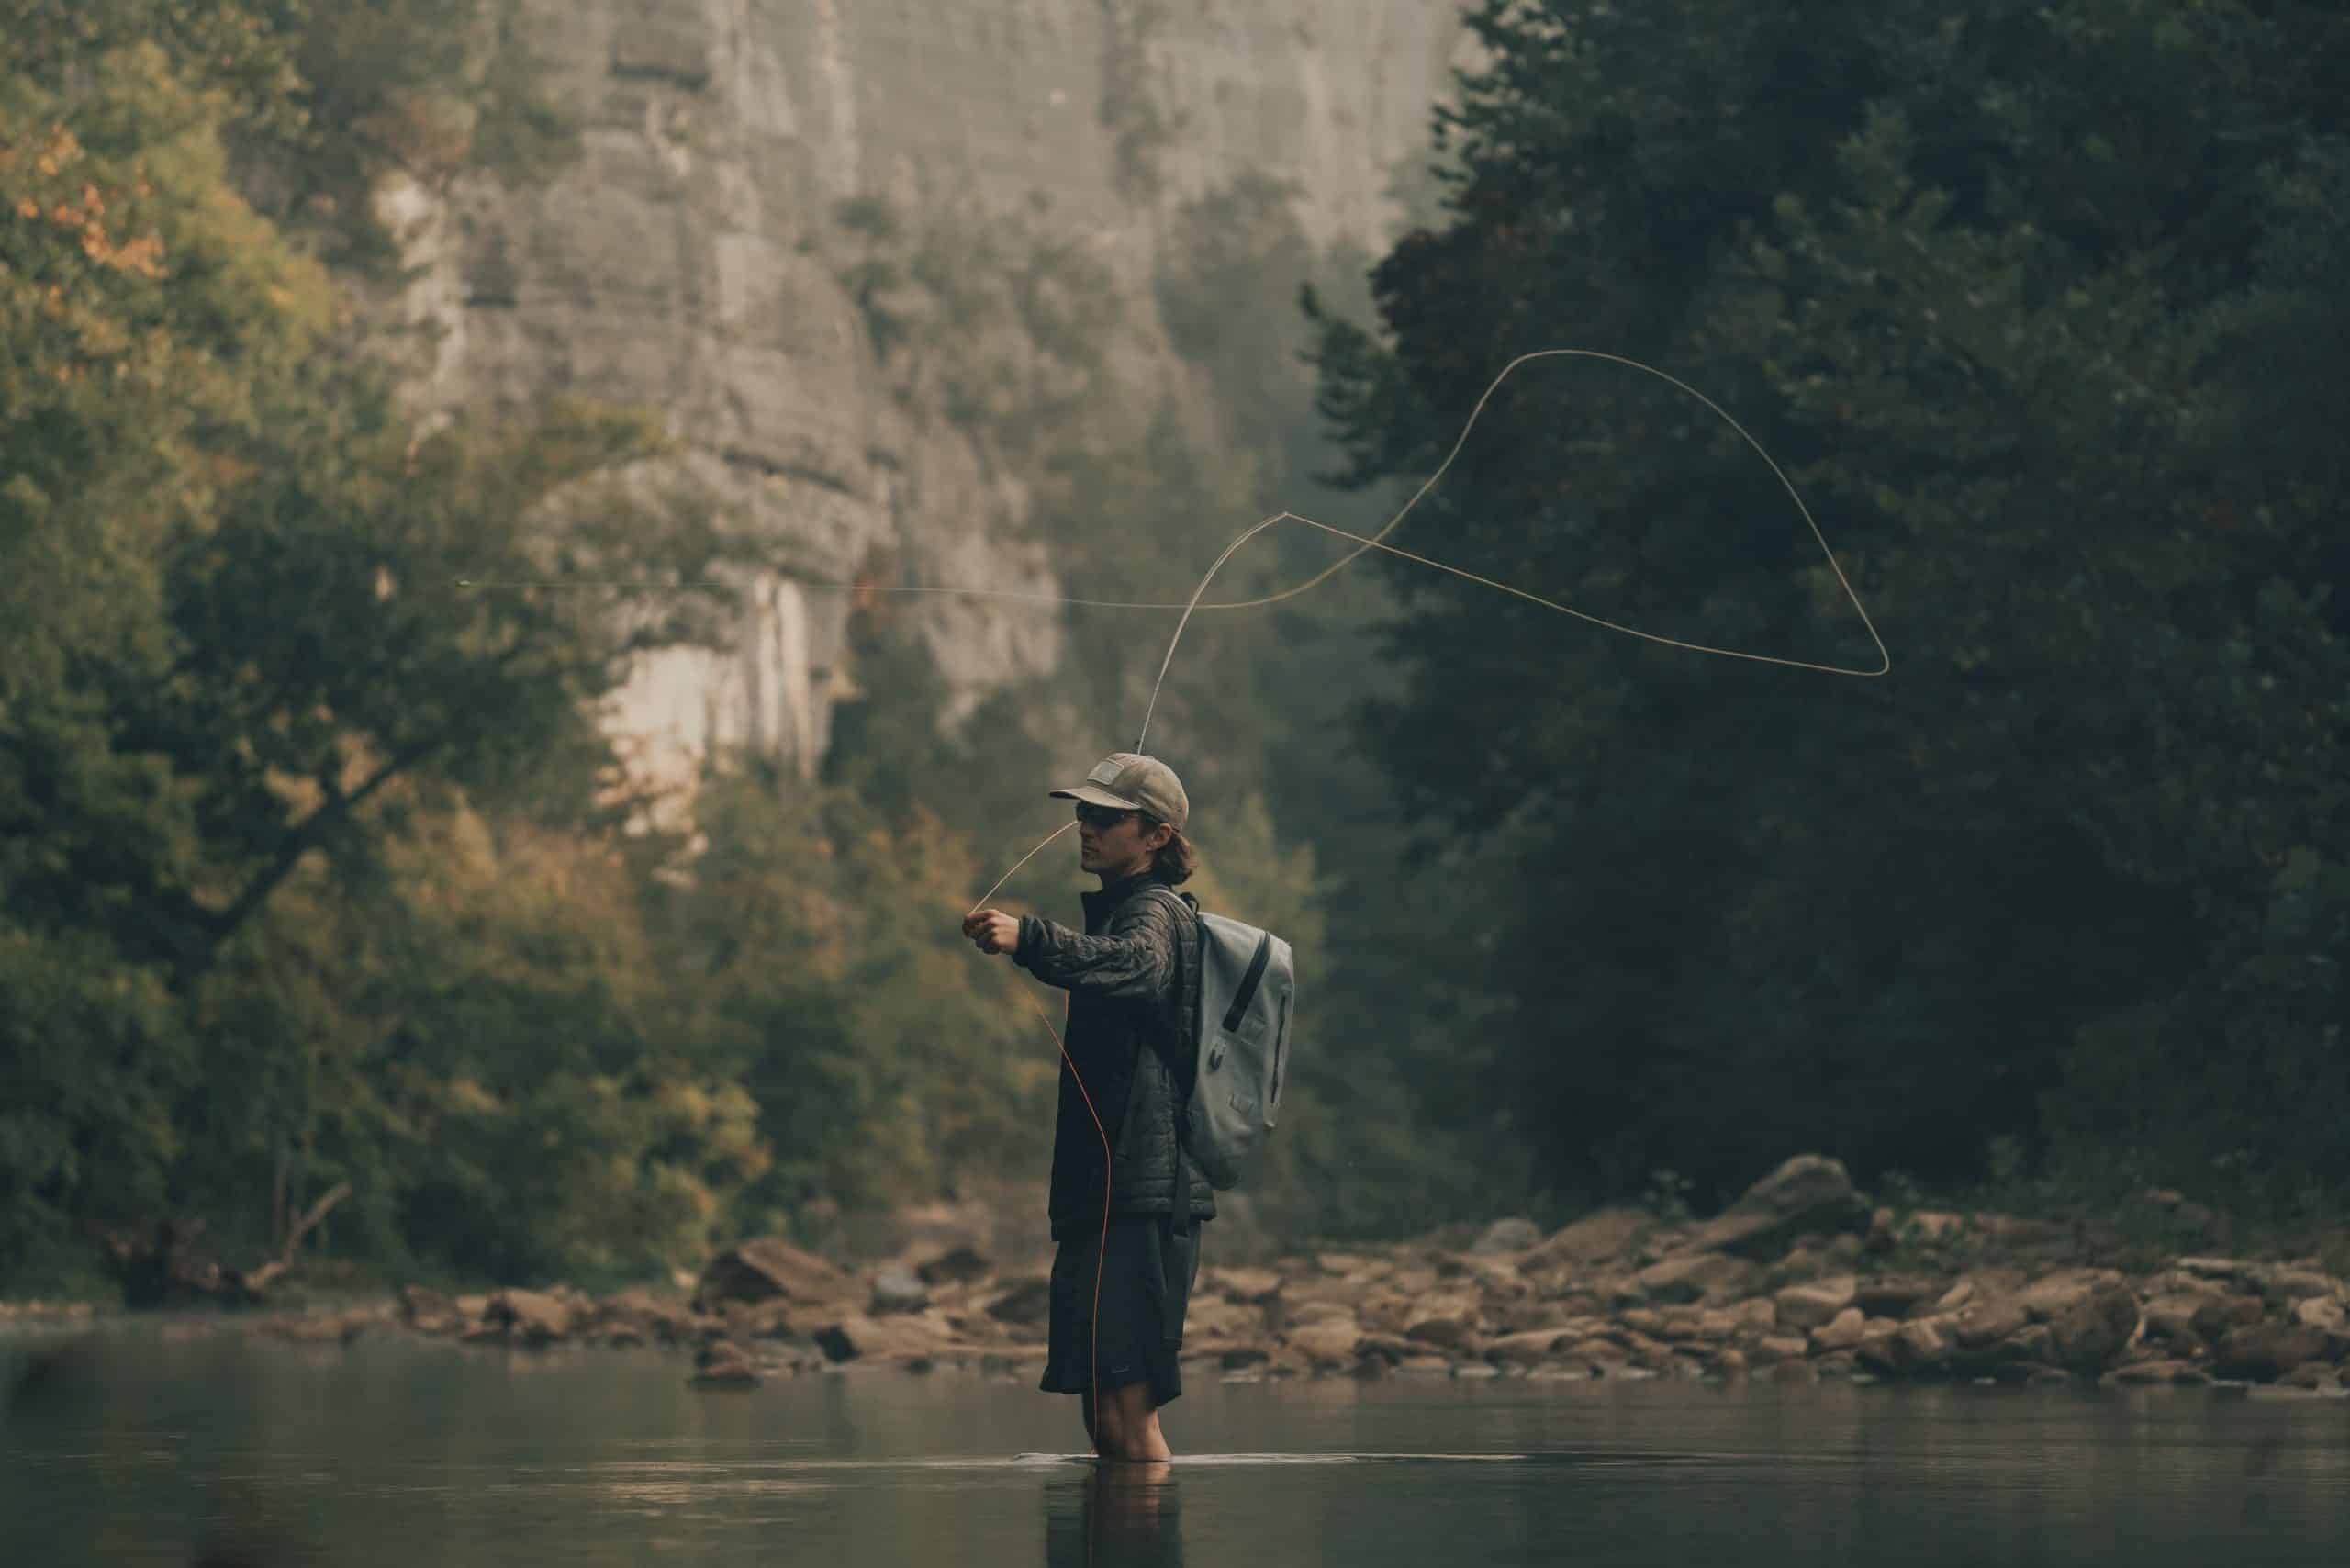 Fly fisherman on the Upper Buffalo National River near Ponca, Arkansas.